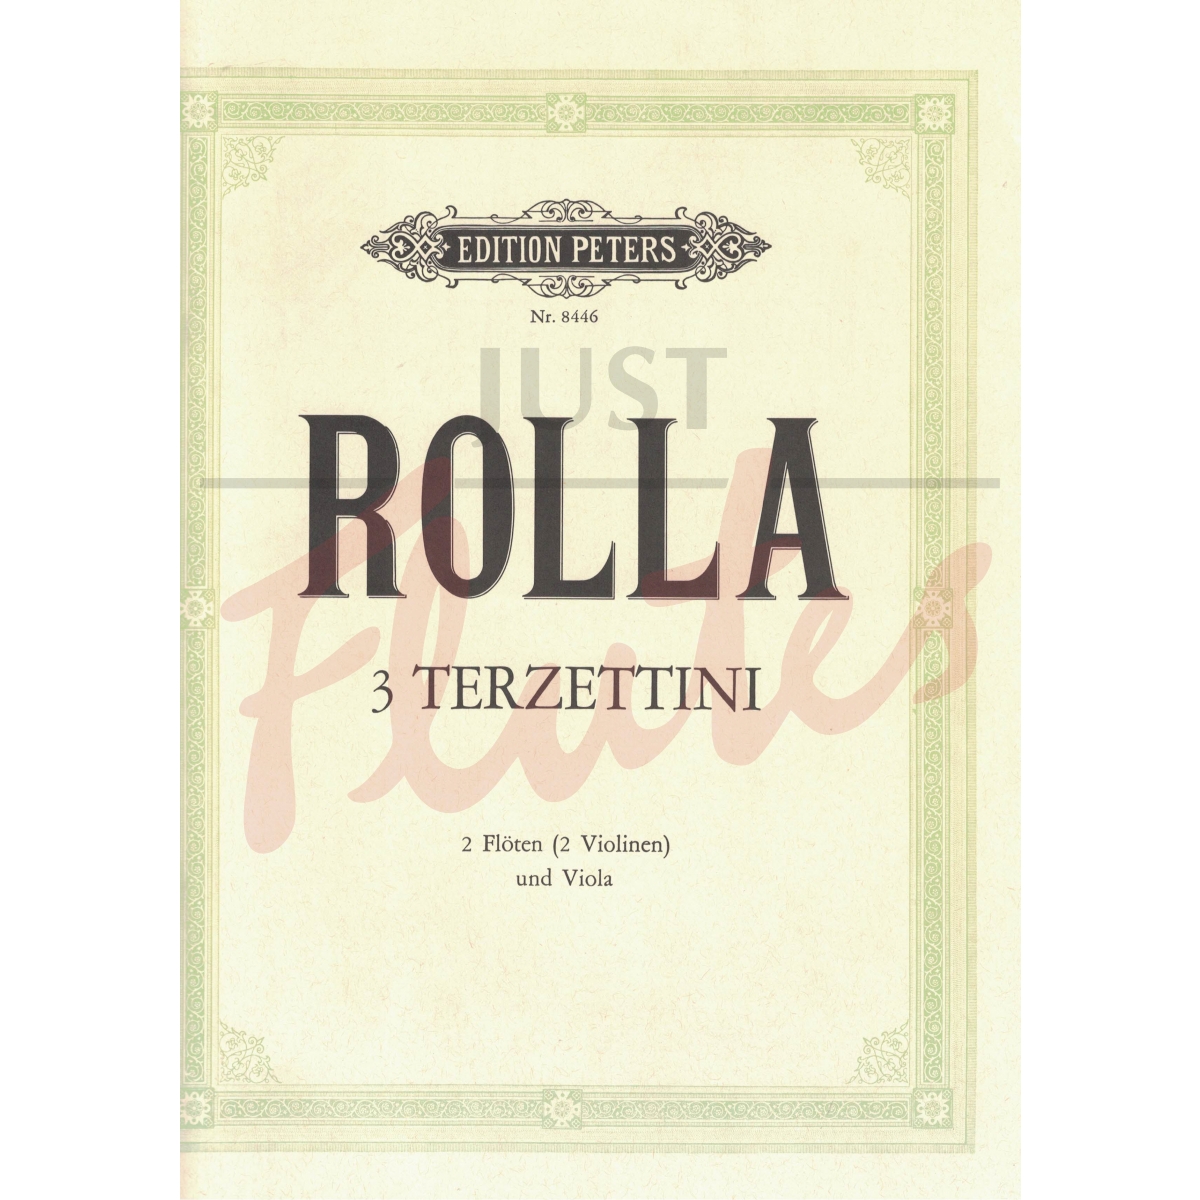 3 Terzettini for Flute, Violin and Viola